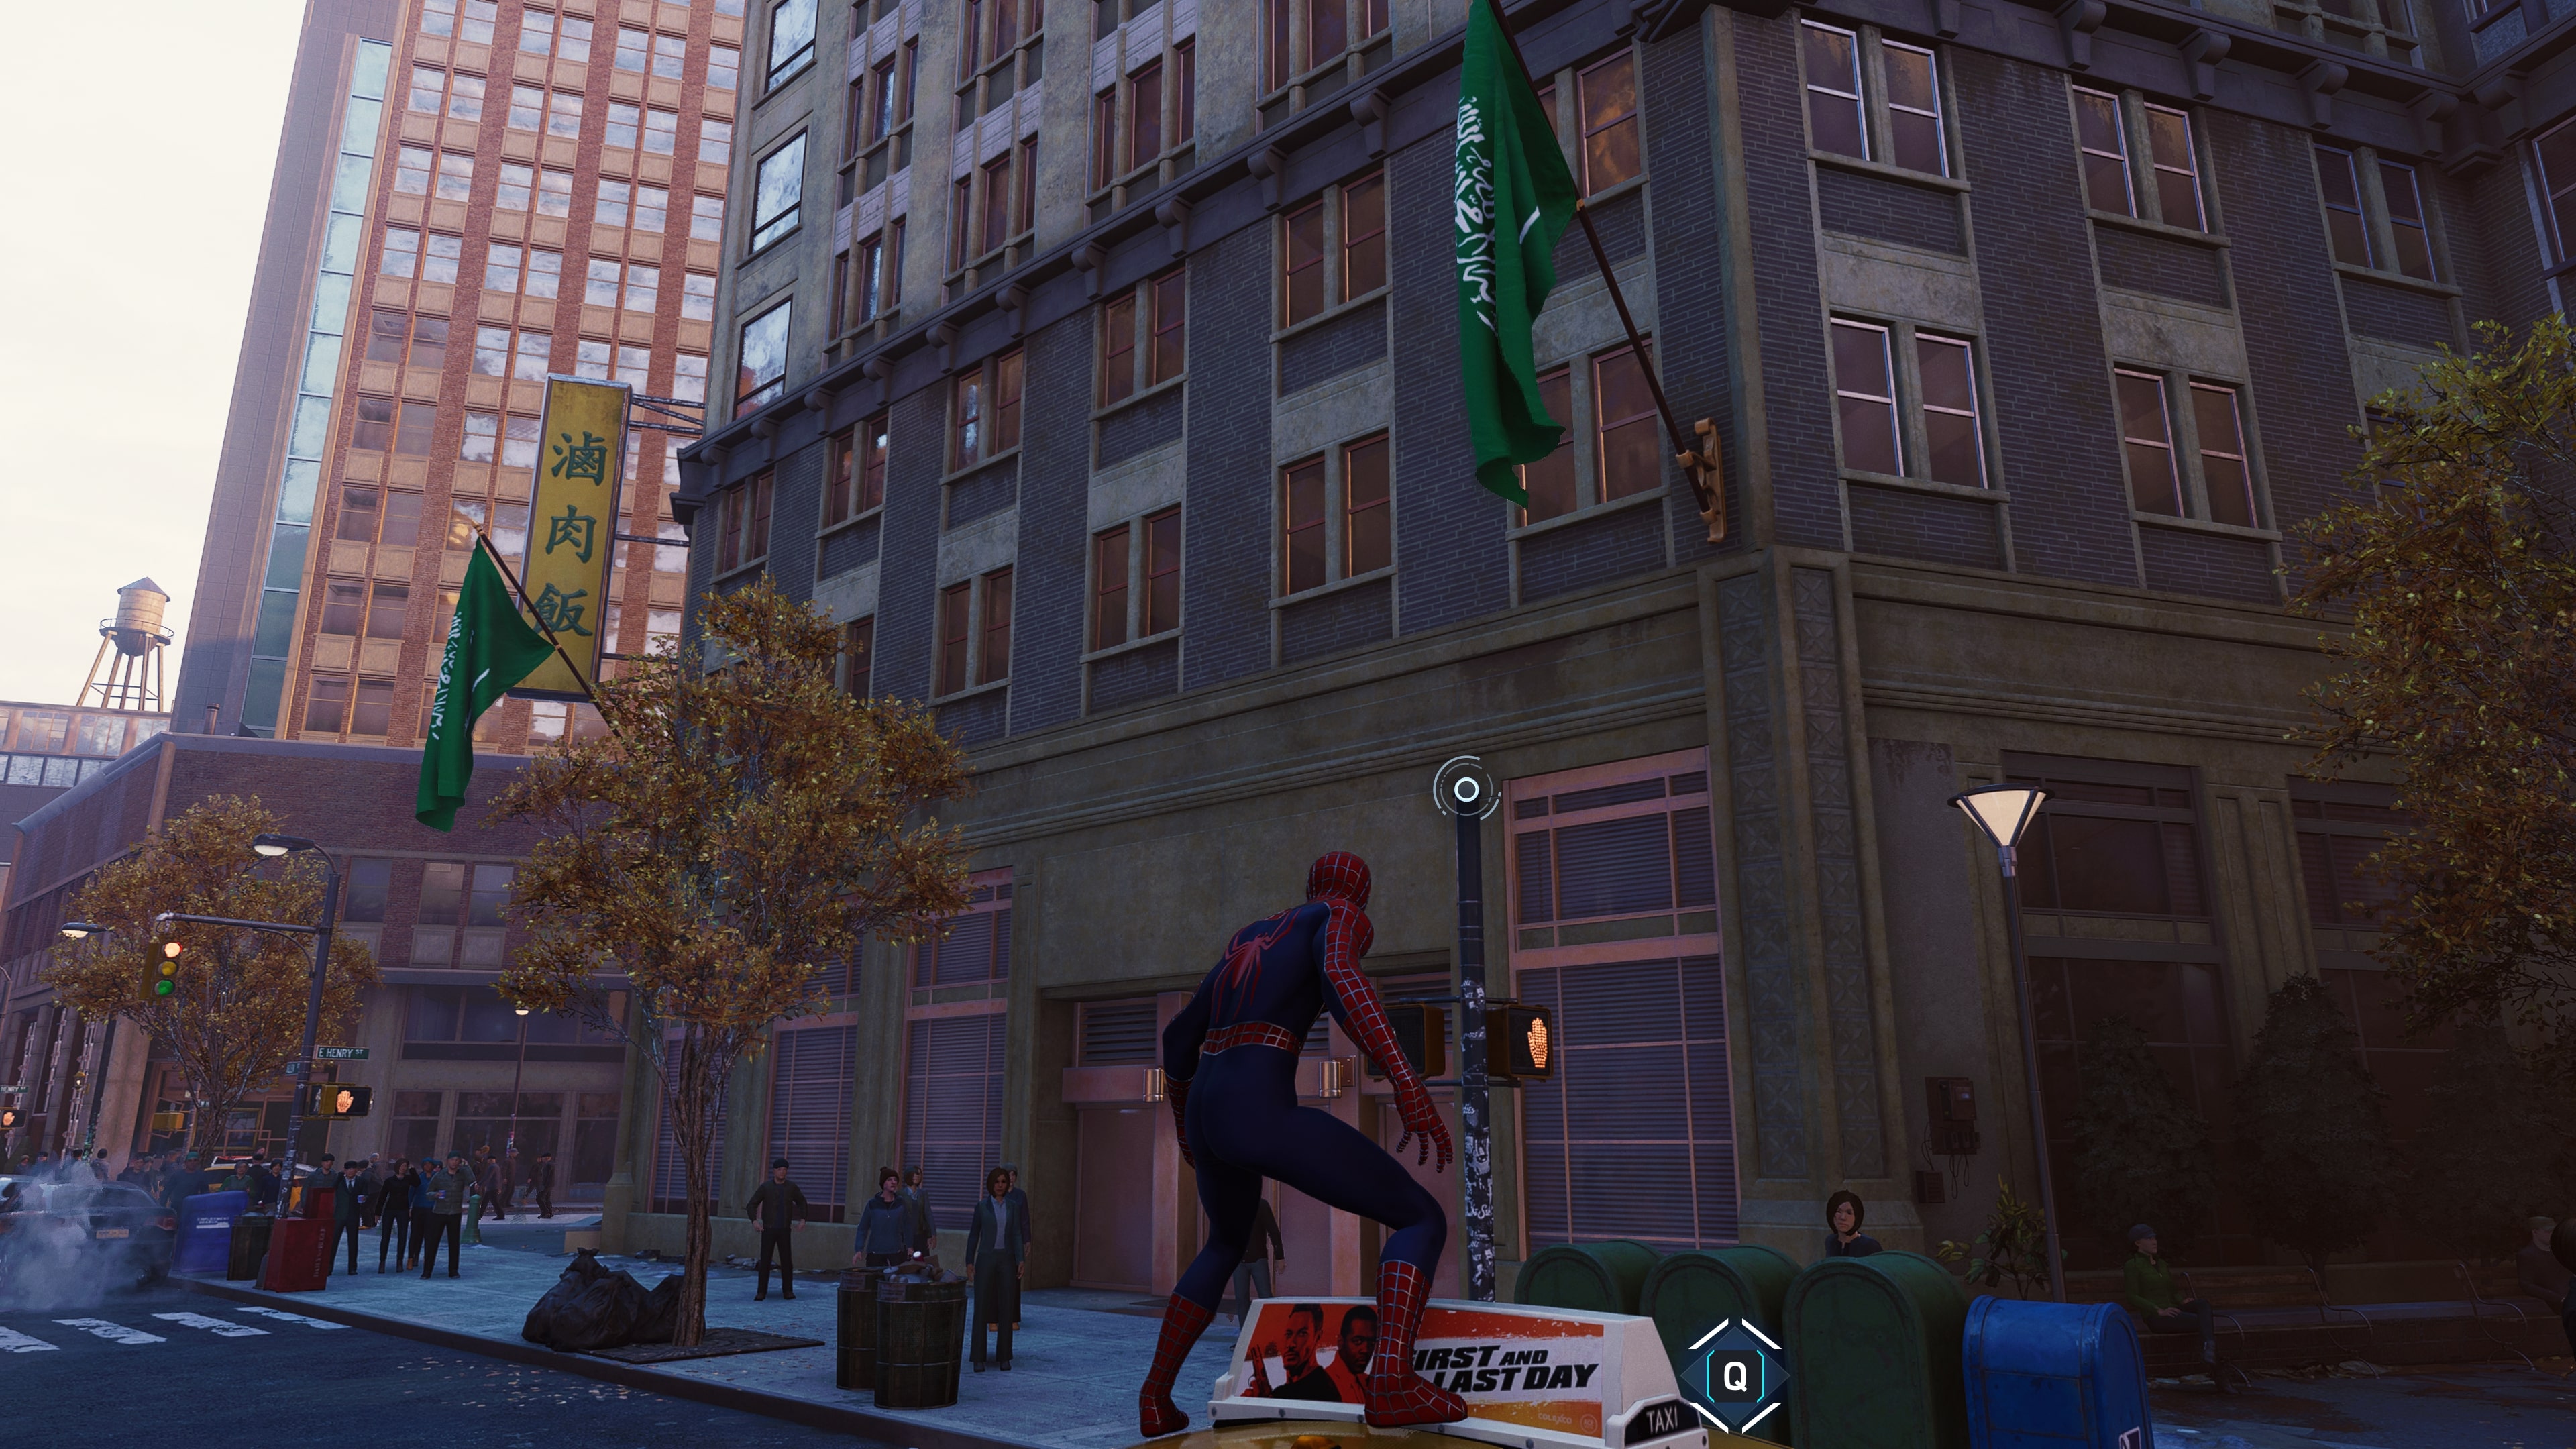 sa 1 image - Replacing all flags to the saudi flag mod for Marvel's Spider- Man Remastered - Mod DB